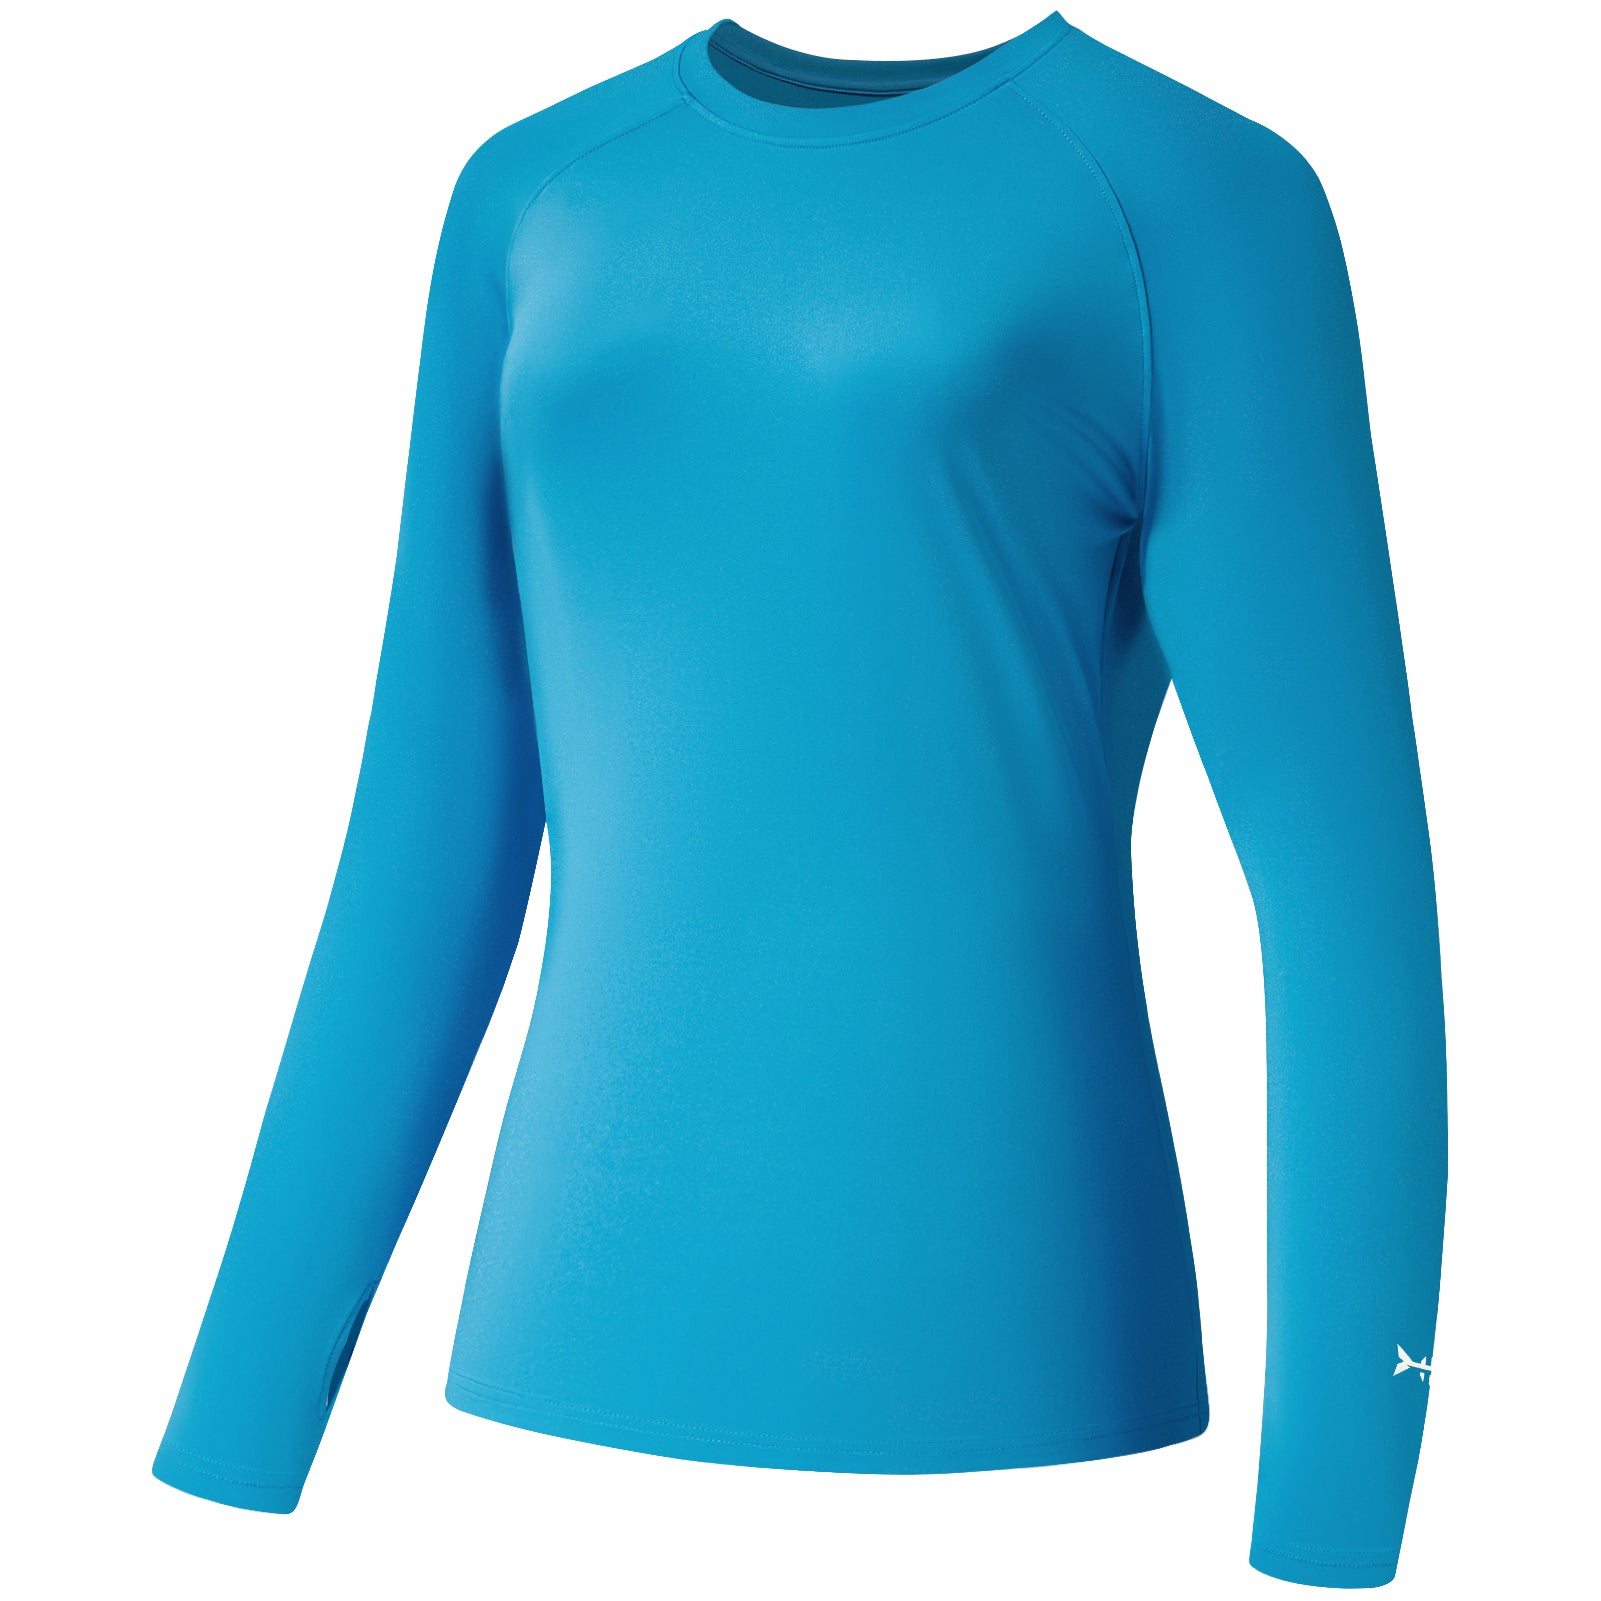 BASSDASH Women's Long Sleeve Shirts UPF 50+ UV Sun Protection